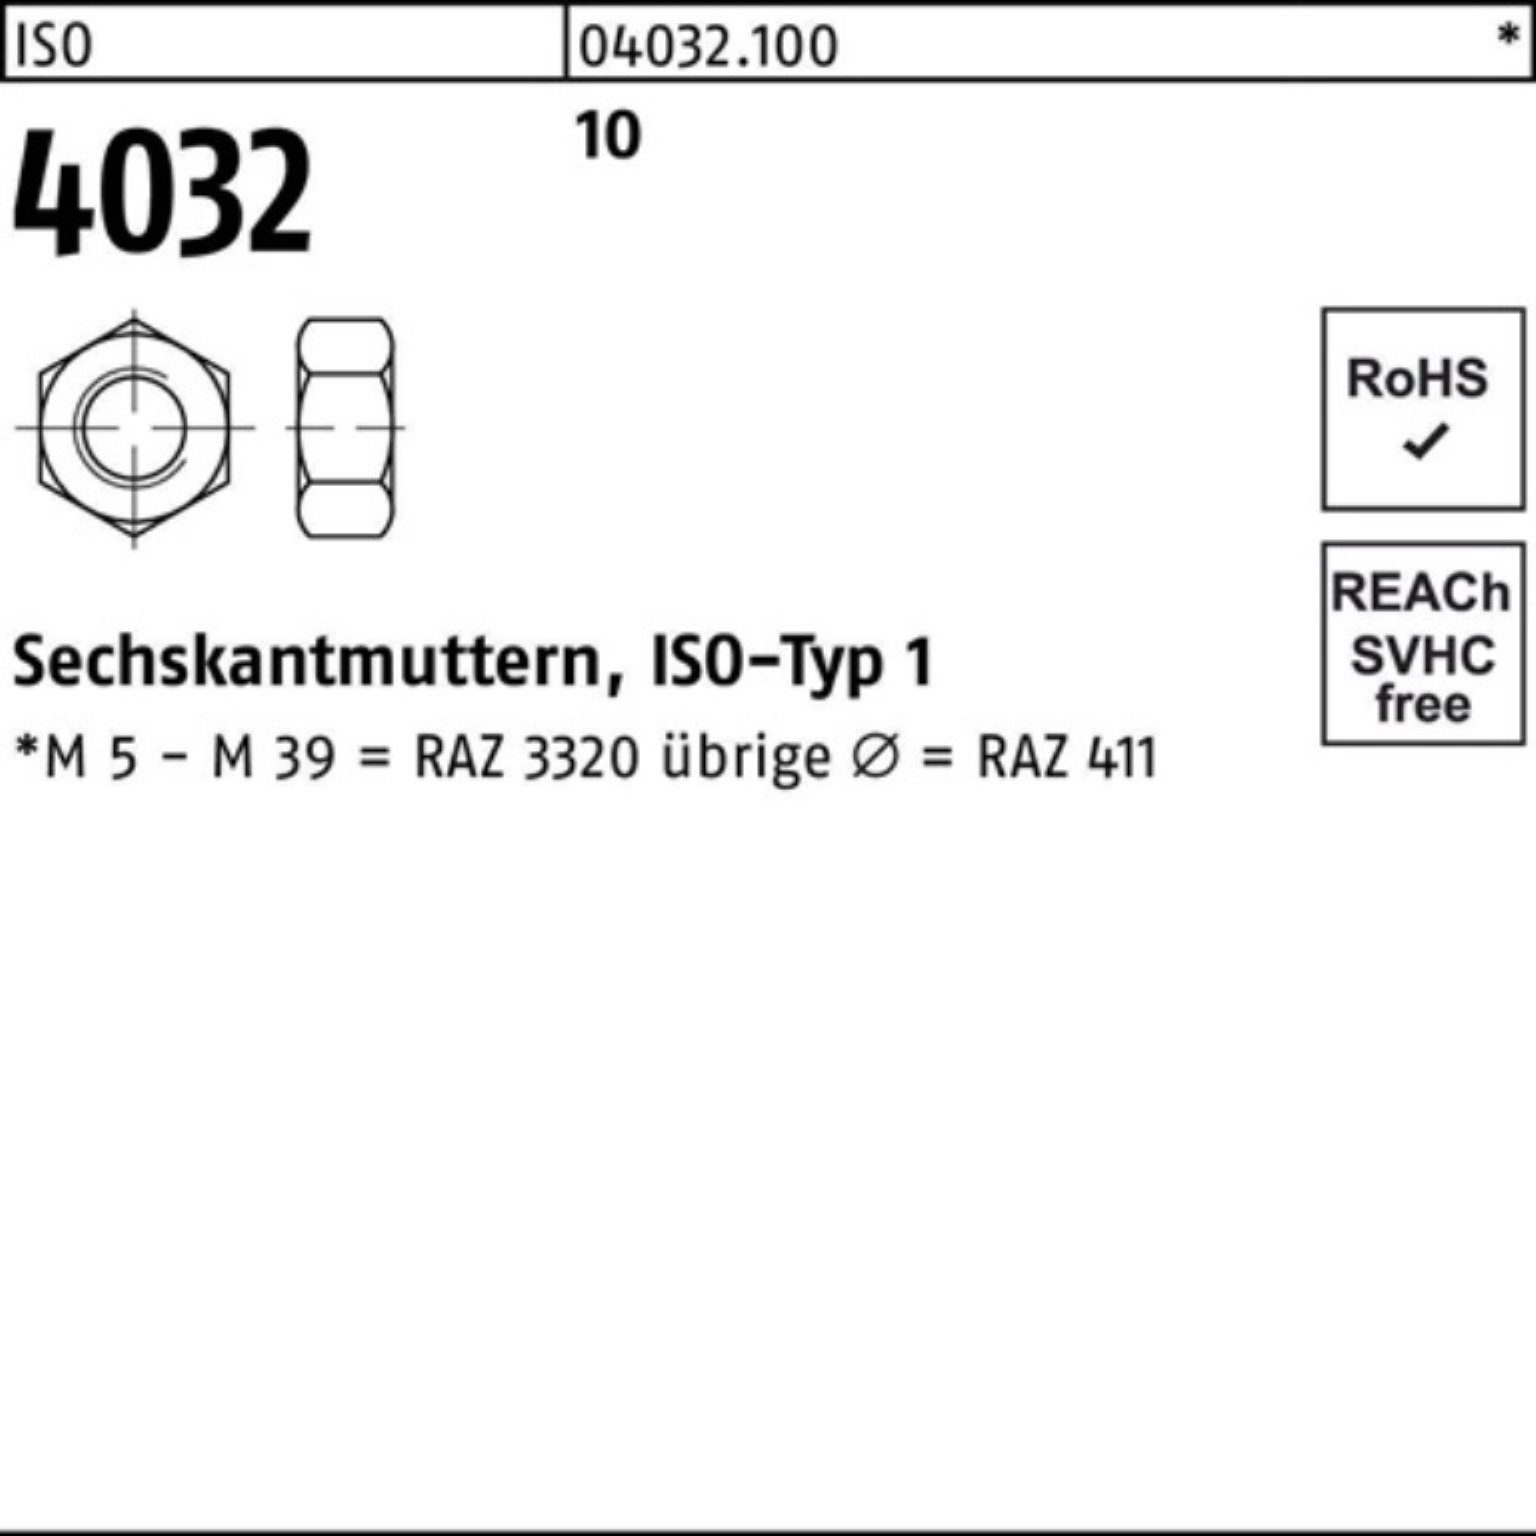 Sechskantmutter Bufab 50 4032 Sechs 100er ISO Stück ISO 10 4032 10 M20 Pack Muttern